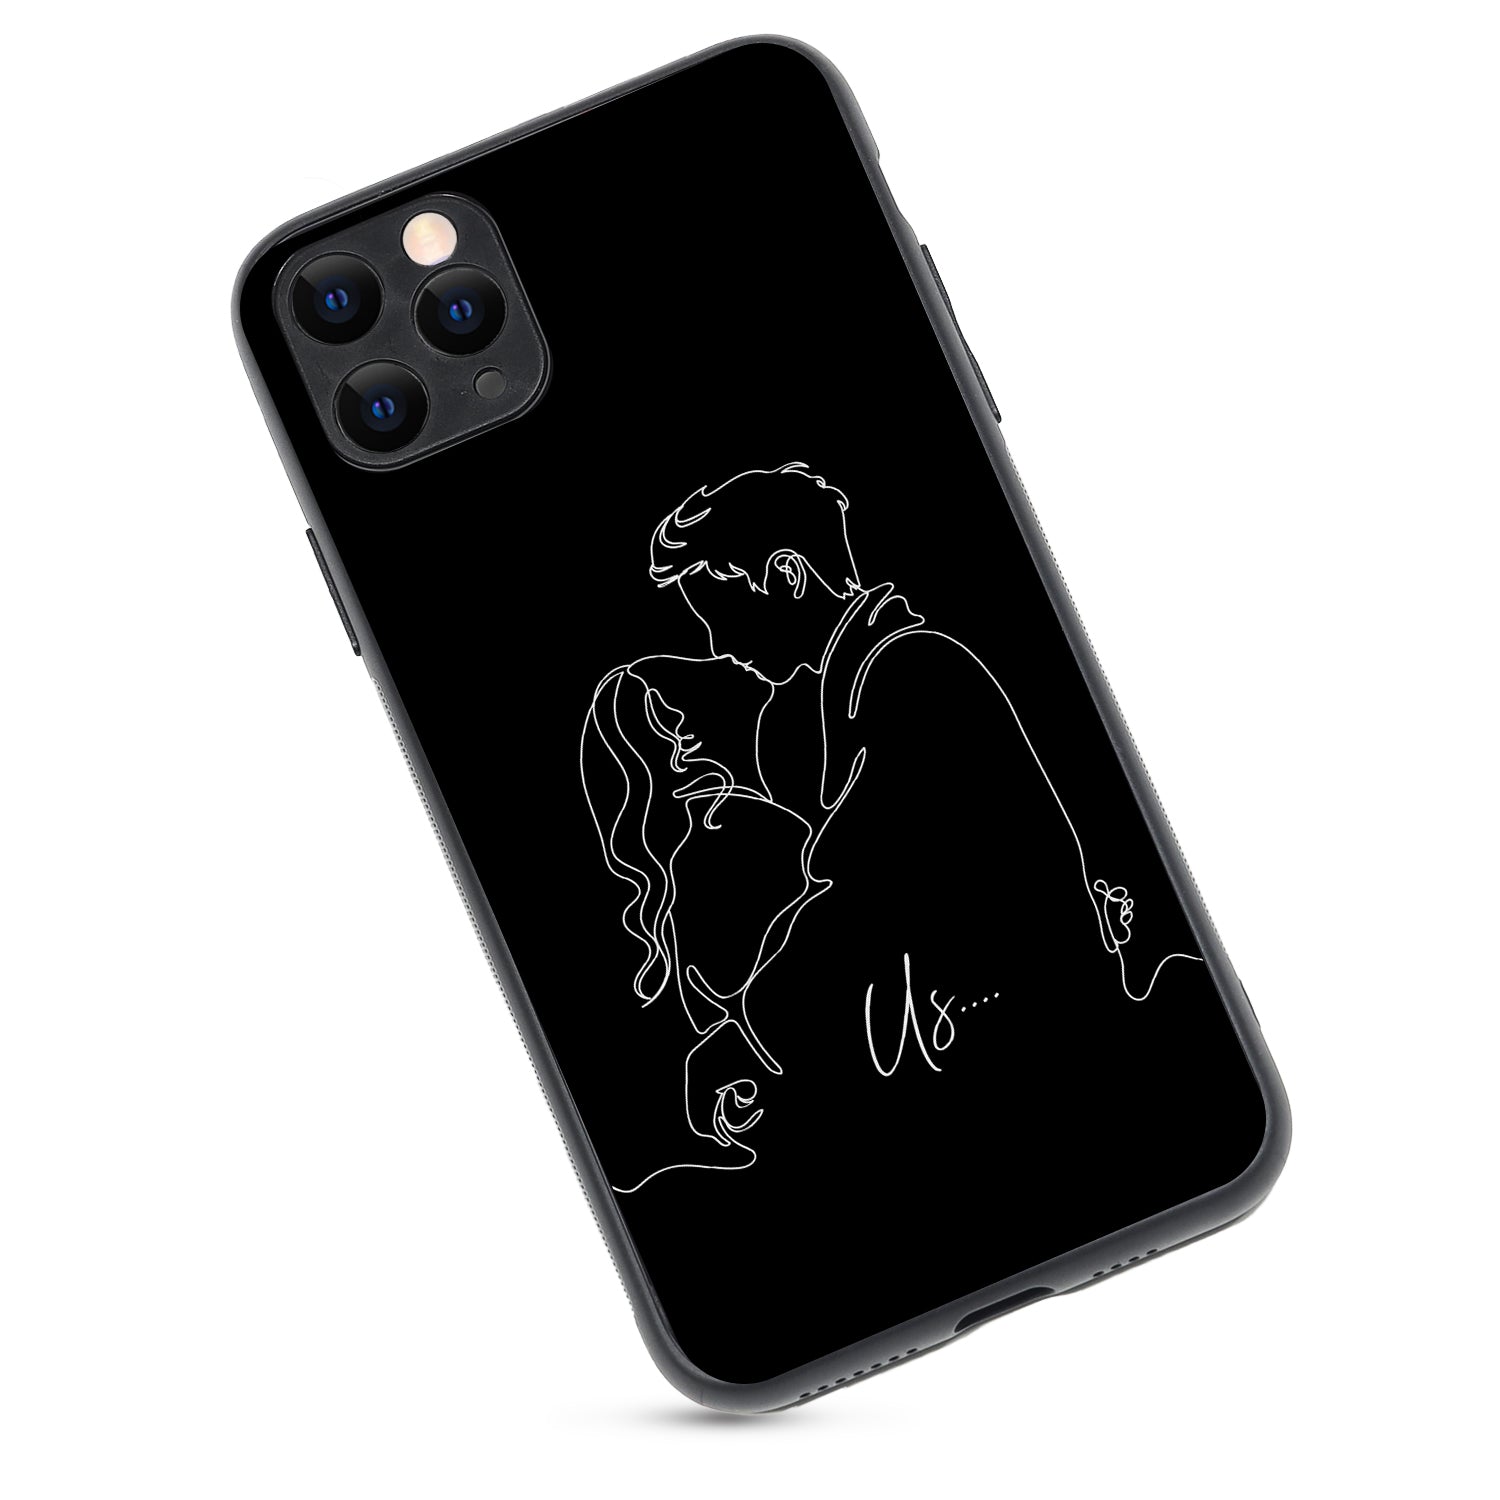 Couple Kiss Couple iPhone 11 Pro Max Case